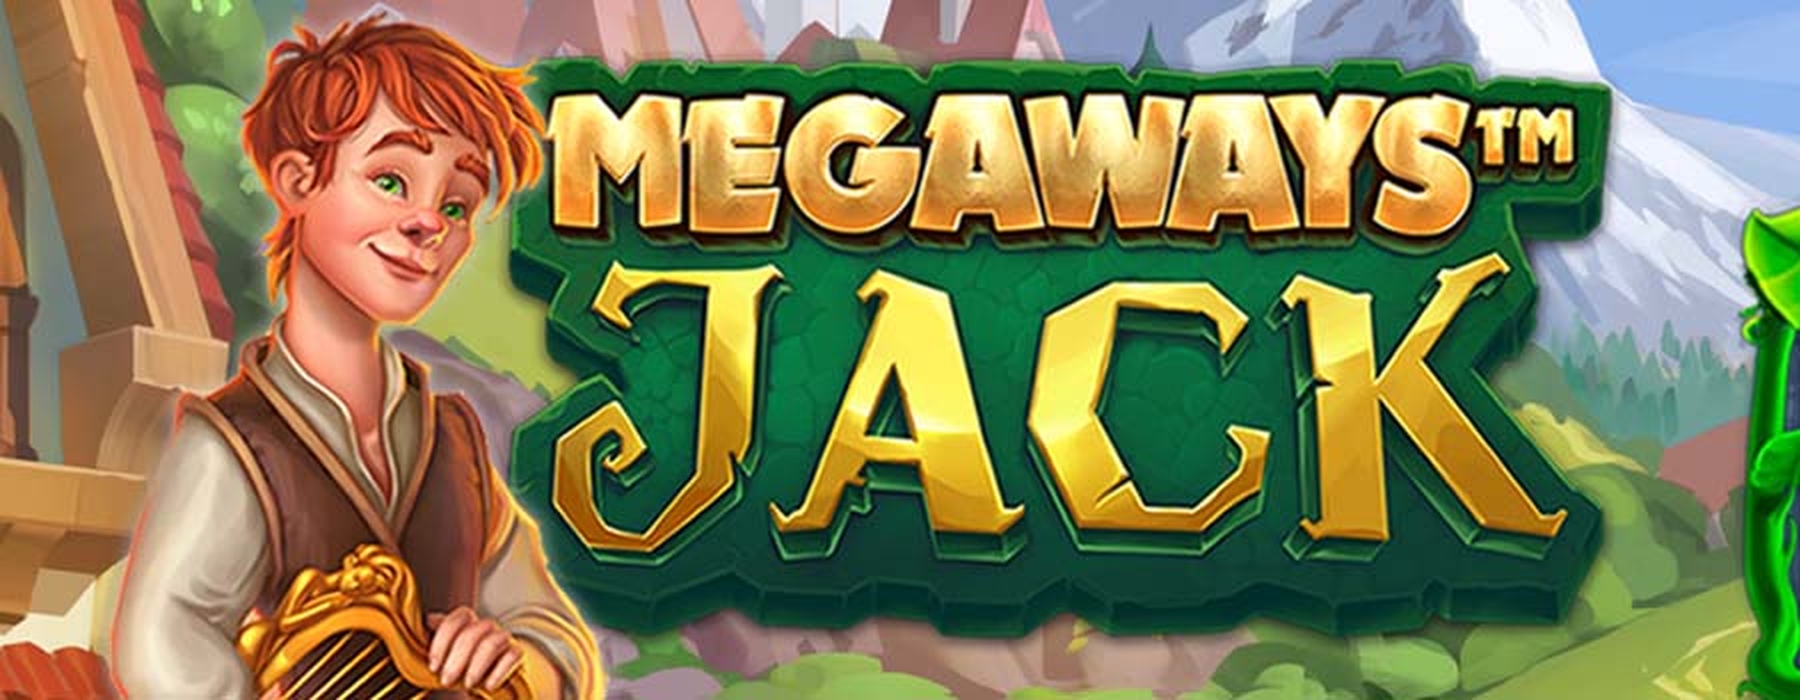 Megaways Jack demo